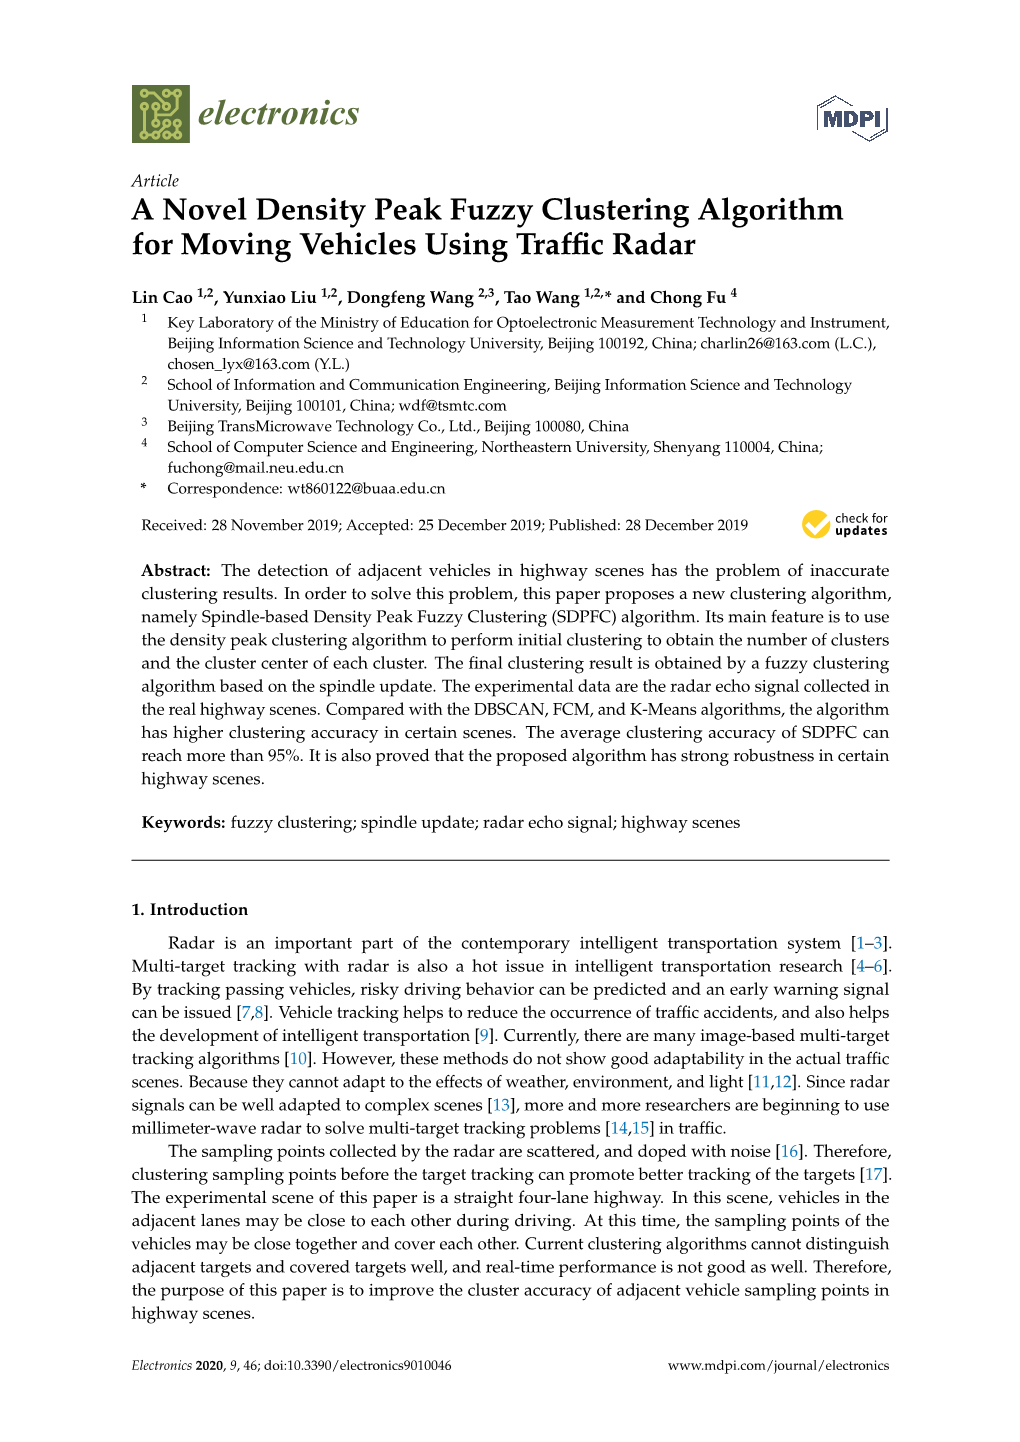 A Novel Density Peak Fuzzy Clustering Algorithm for Moving Vehicles Using Traffic Radar